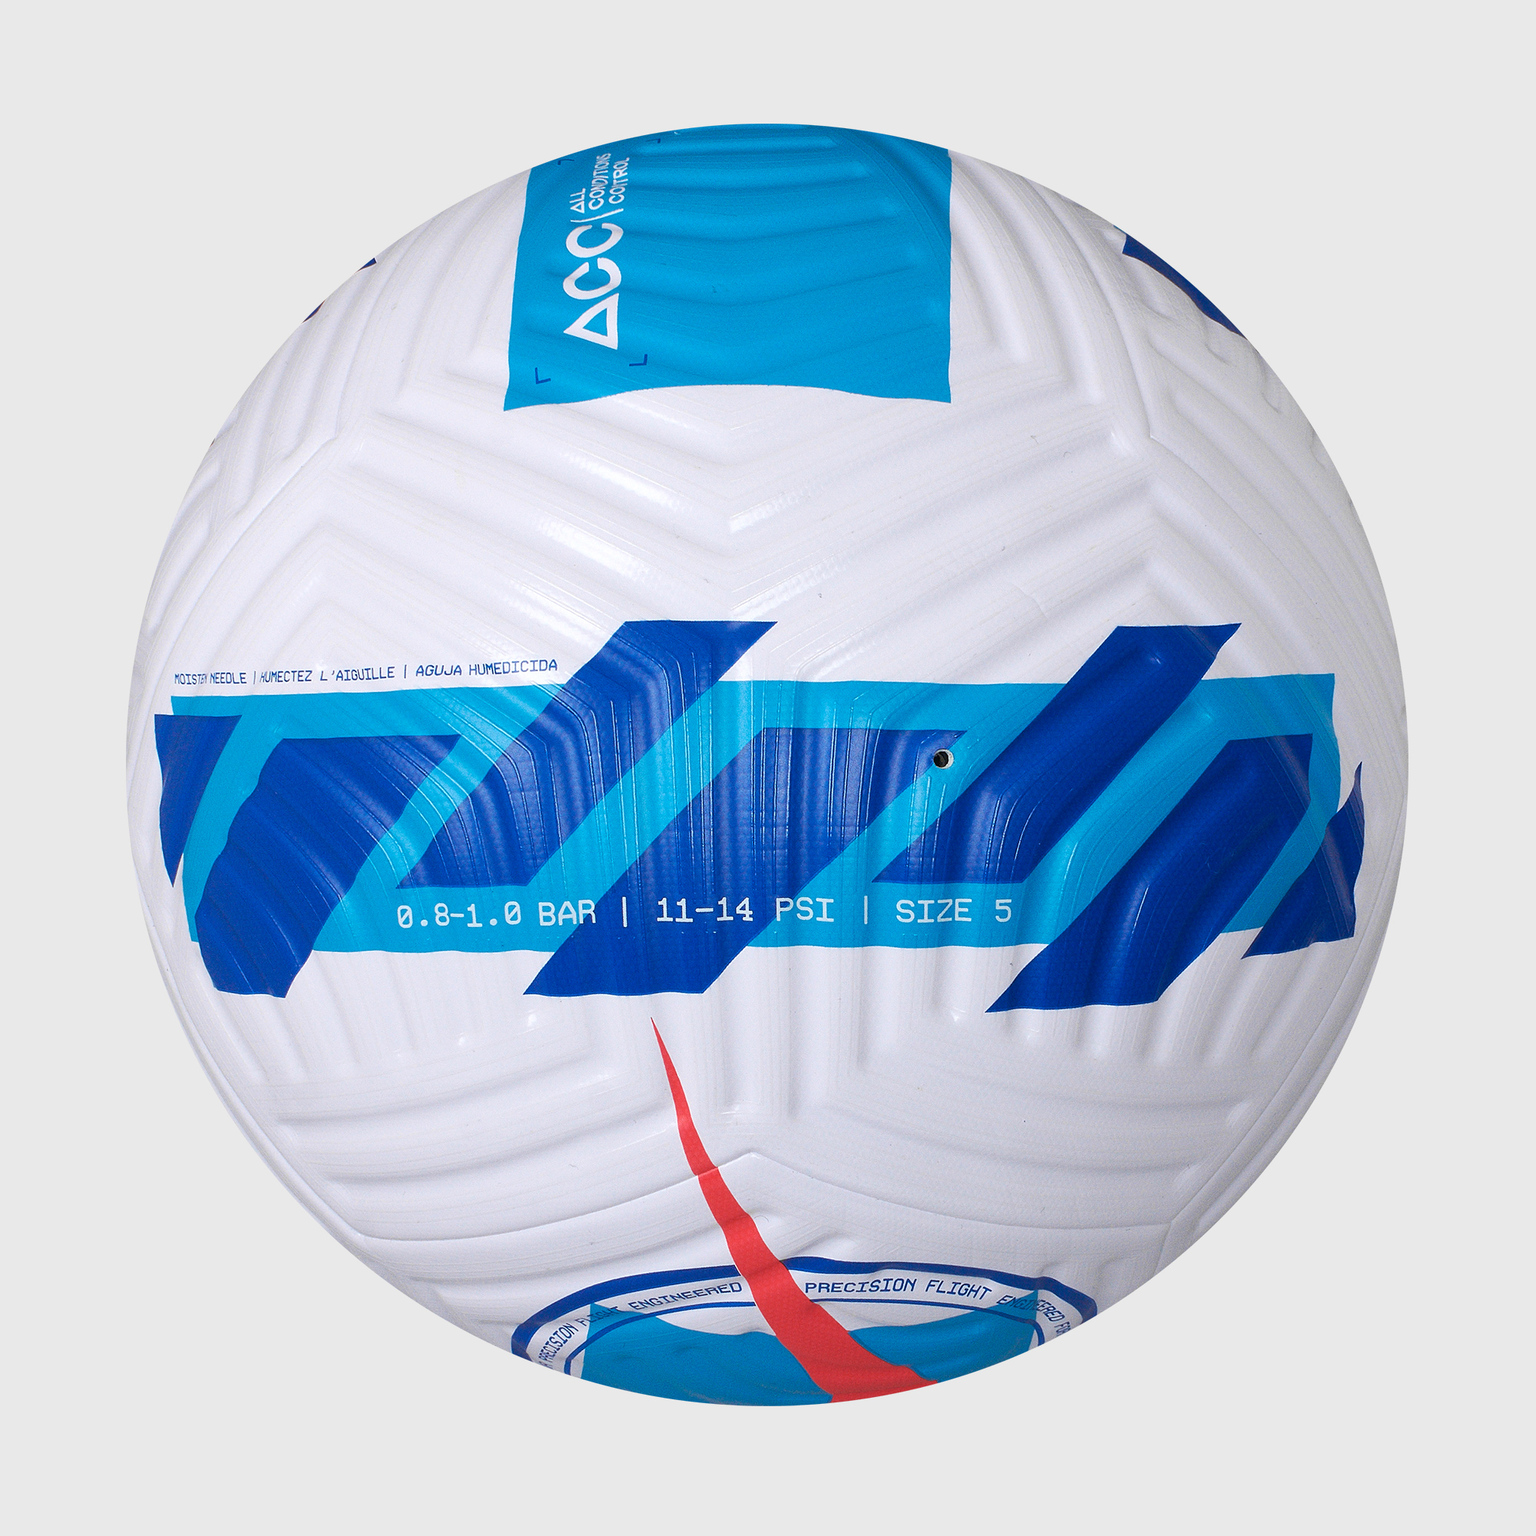 Футбольный мяч Nike Serie A Flight DDC2374-100